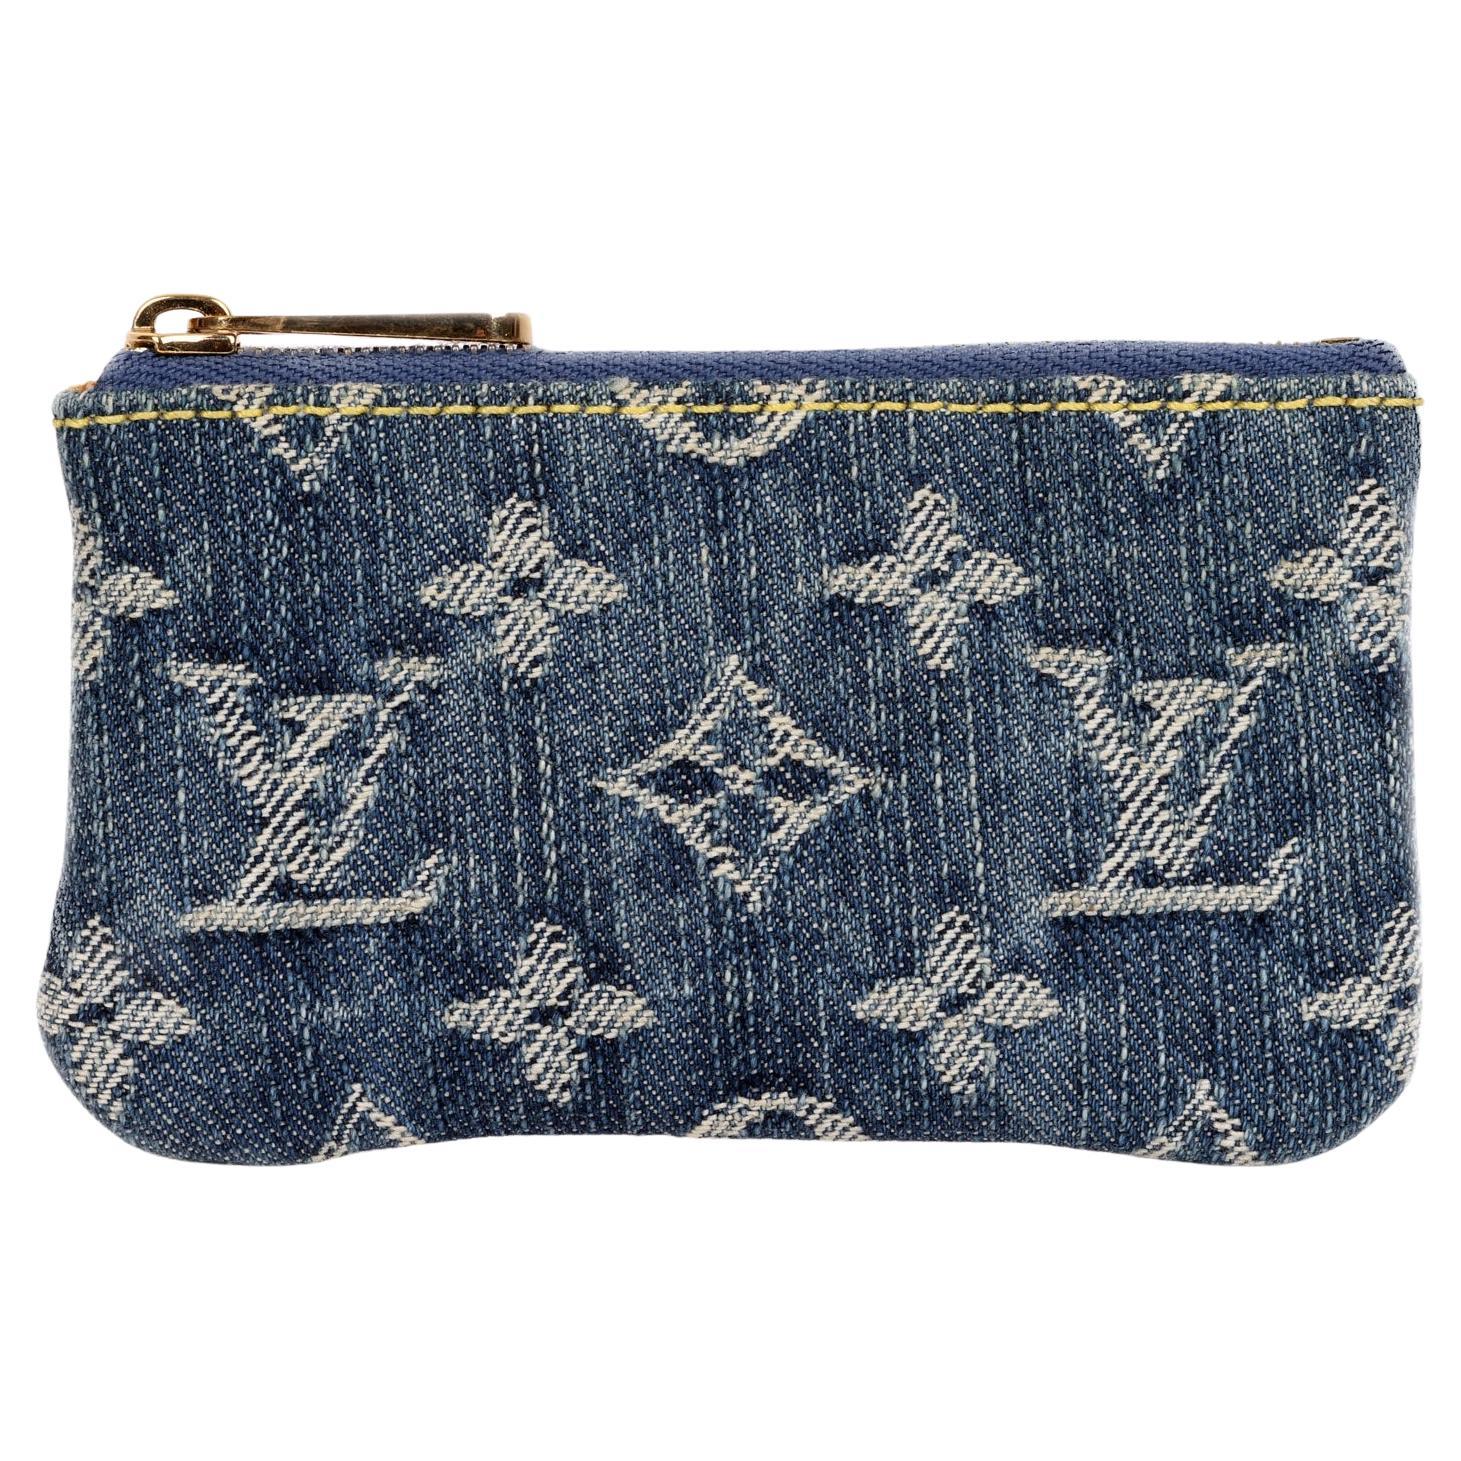 Louis Vuitton Navy Blue Monogram Denim Round Bag Charm and Key